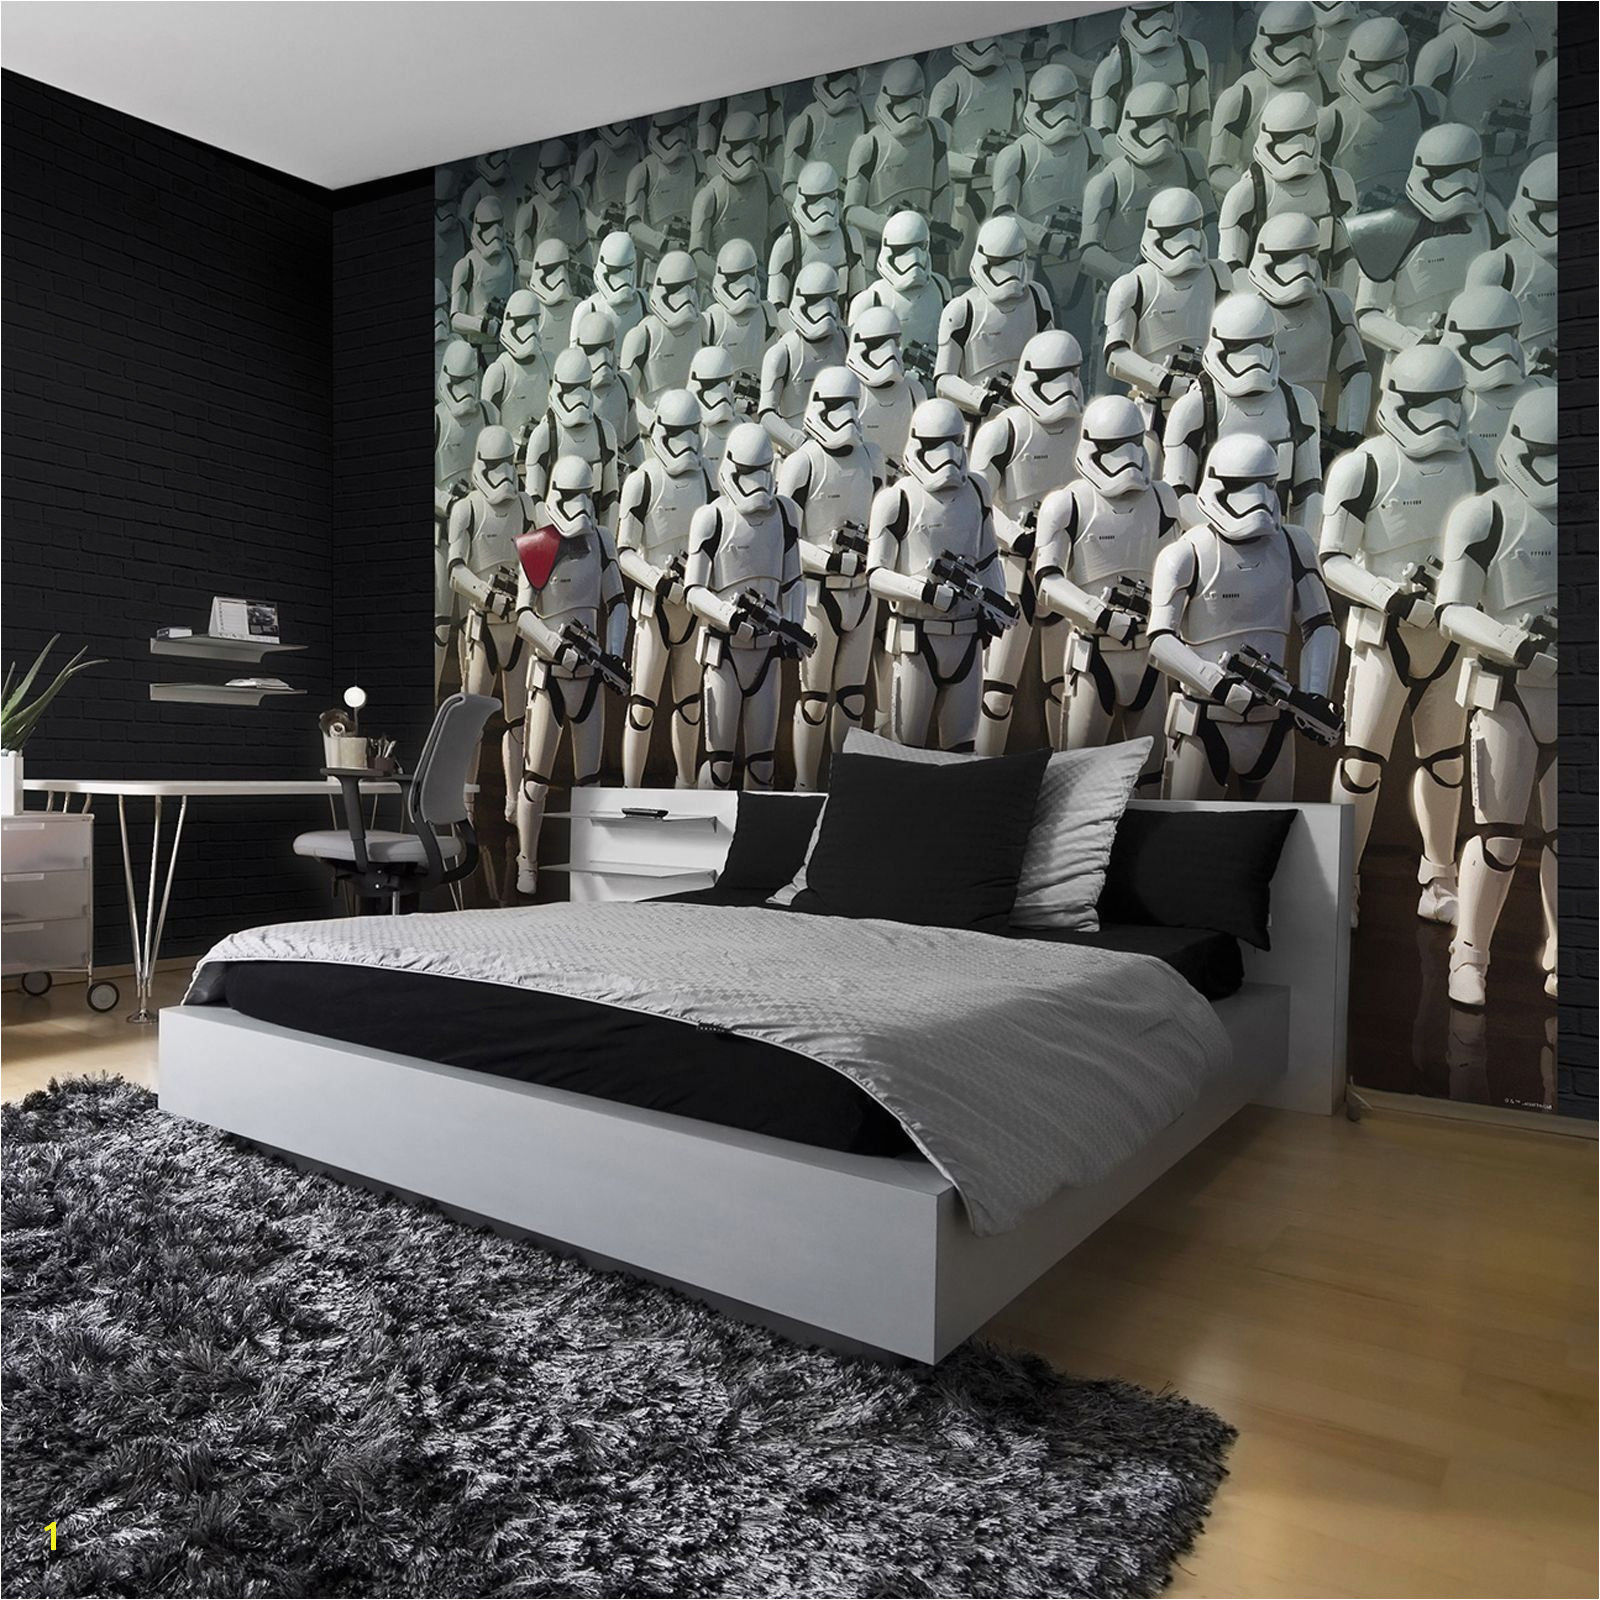 Star Wars Murals Wallpaper Star Wars Stormtrooper Wall Mural Dream Bedroom …